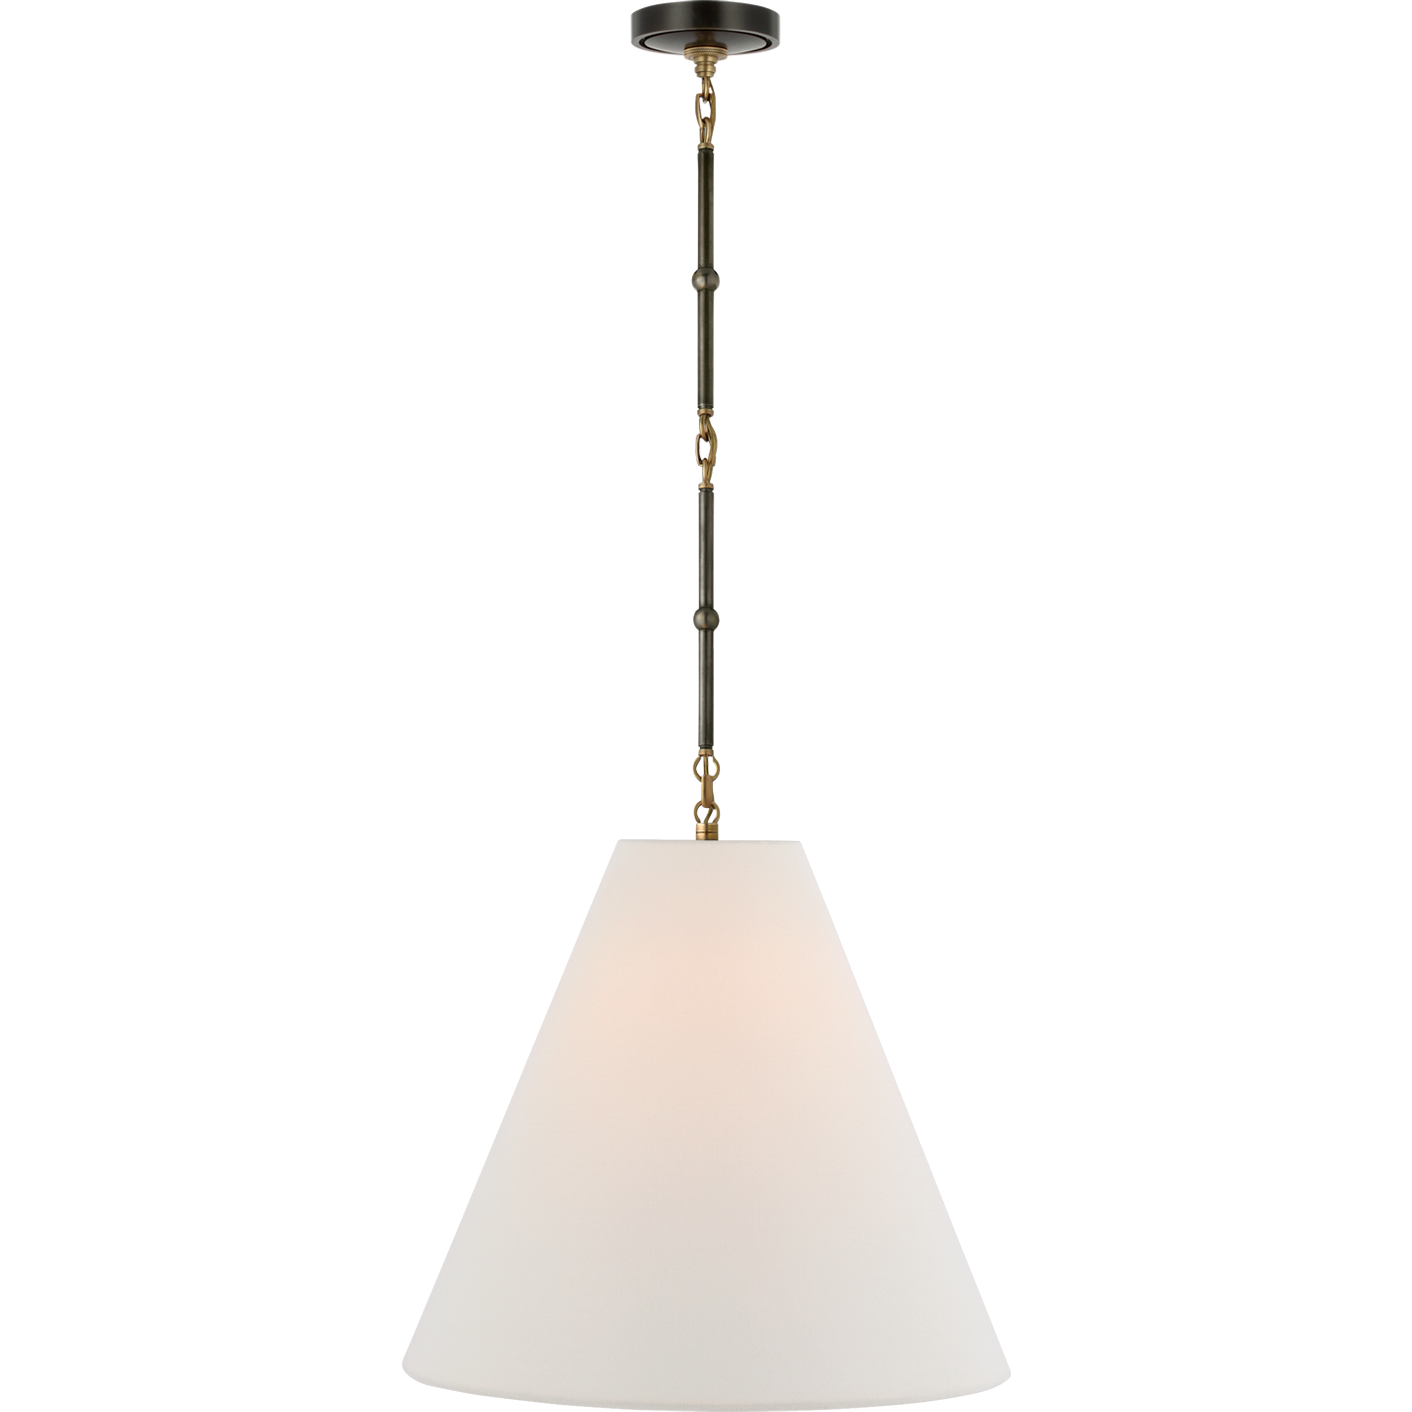 Goodman Medium Hanging Light with Linen Shade